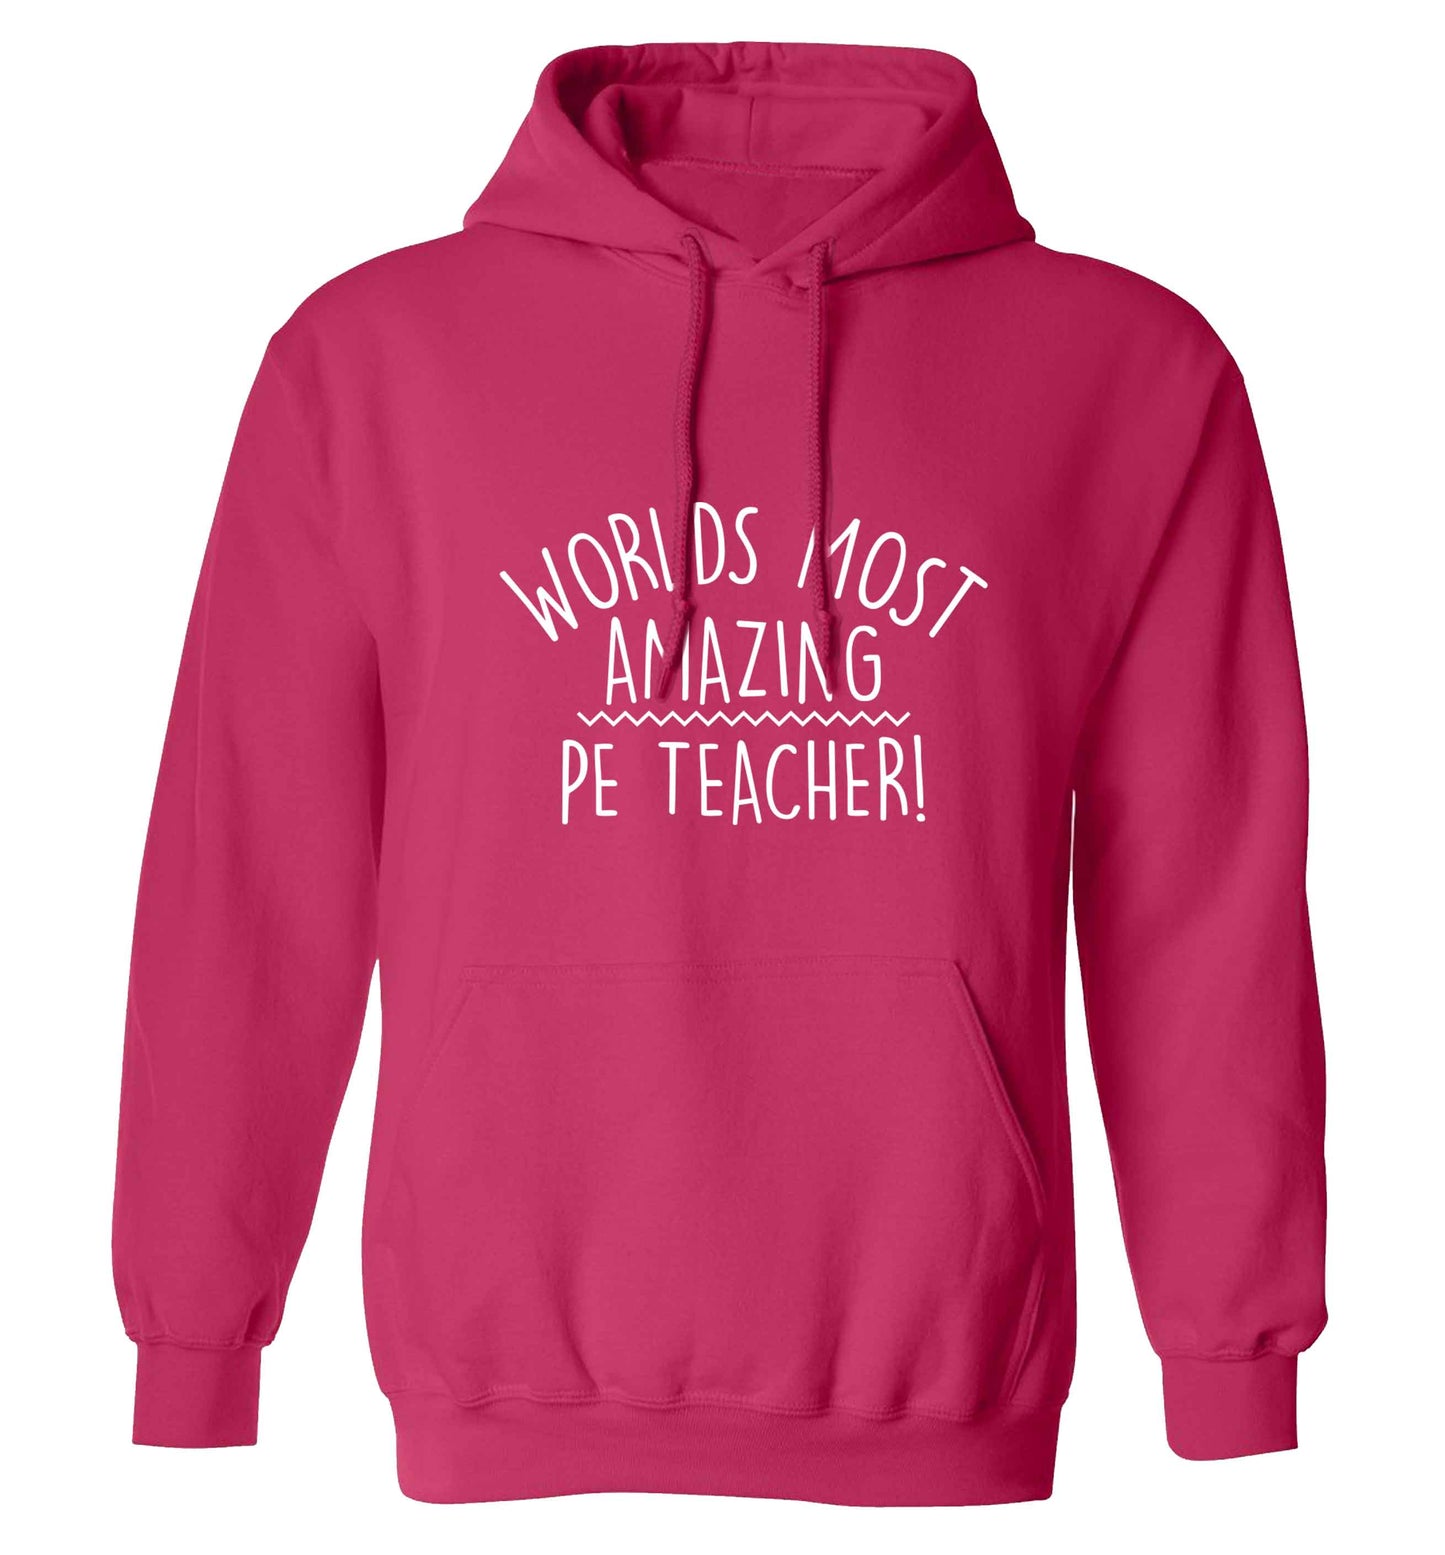 Worlds most amazing PE teacher adults unisex pink hoodie 2XL